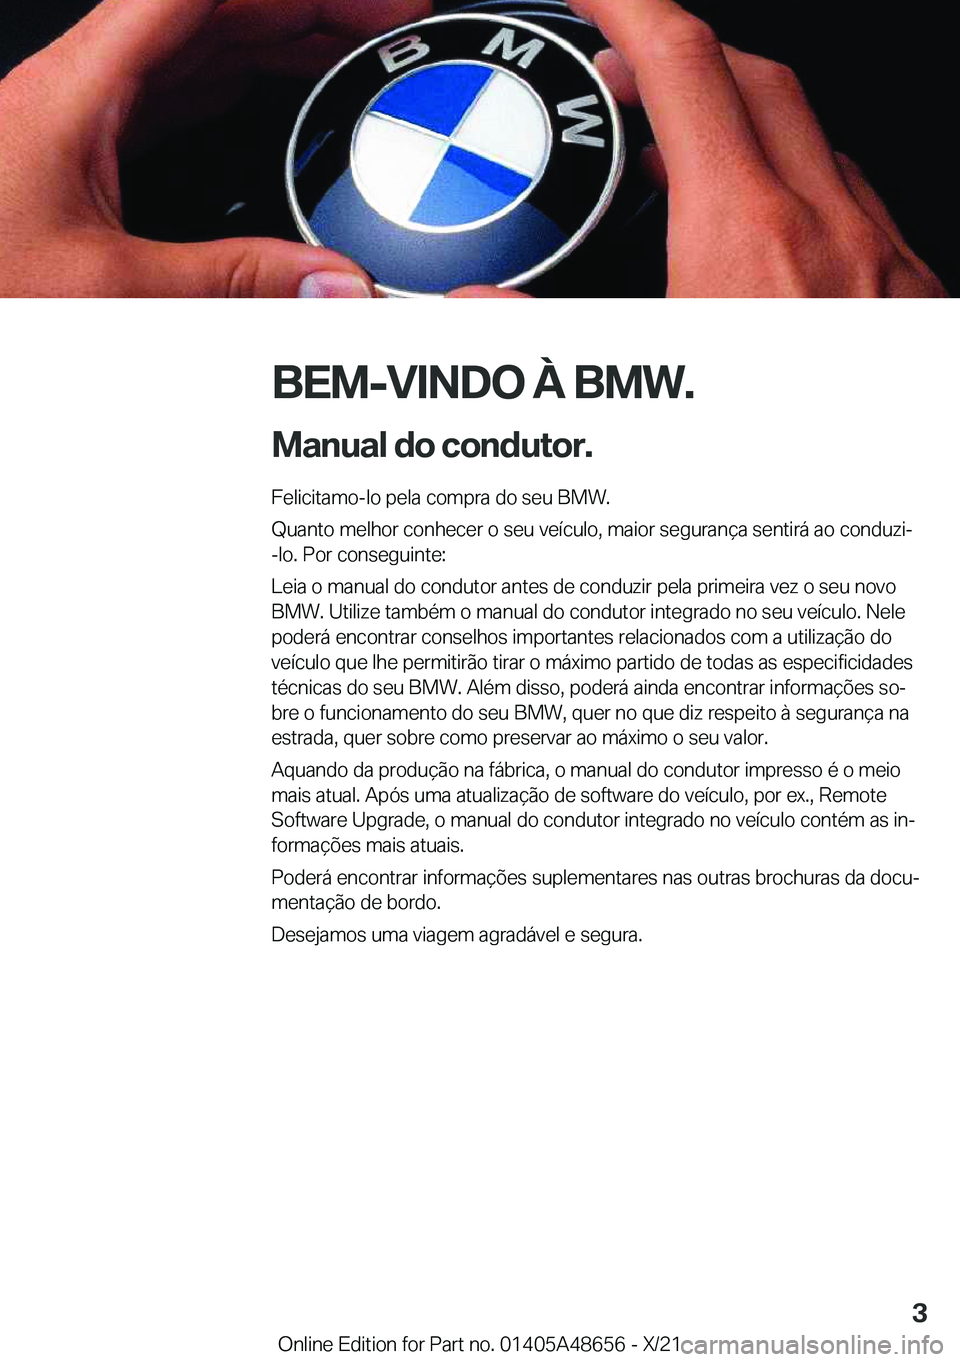 BMW 3 SERIES 2022  Manual do condutor (in Portuguese) �B�E�M�-�V�I�N�D�O��À��B�M�W�.
�M�a�n�u�a�l��d�o��c�o�n�d�u�t�o�r�. �F�e�l�i�c�i�t�a�m�o�-�l�o��p�e�l�a��c�o�m�p�r�a��d�o��s�e�u��B�M�W�.
�Q�u�a�n�t�o��m�e�l�h�o�r��c�o�n�h�e�c�e�r��o��s